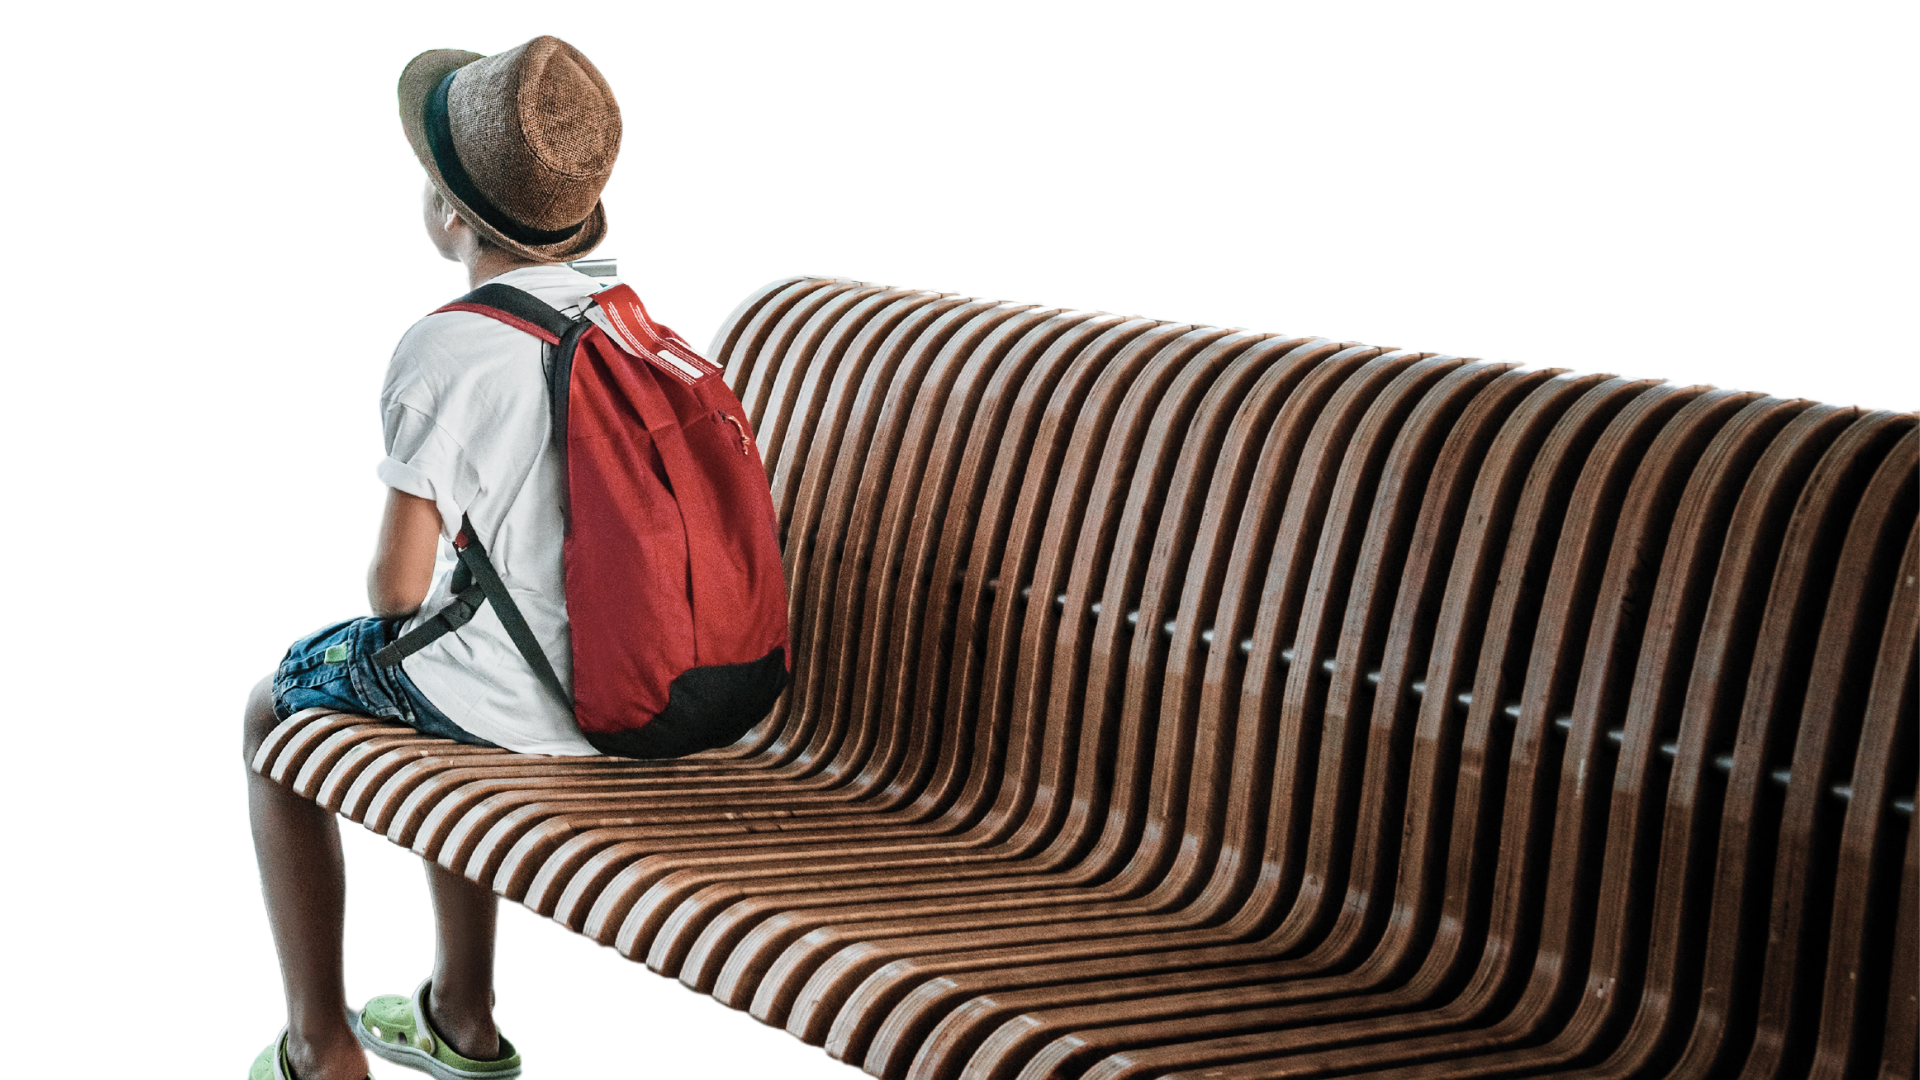 Child on bench